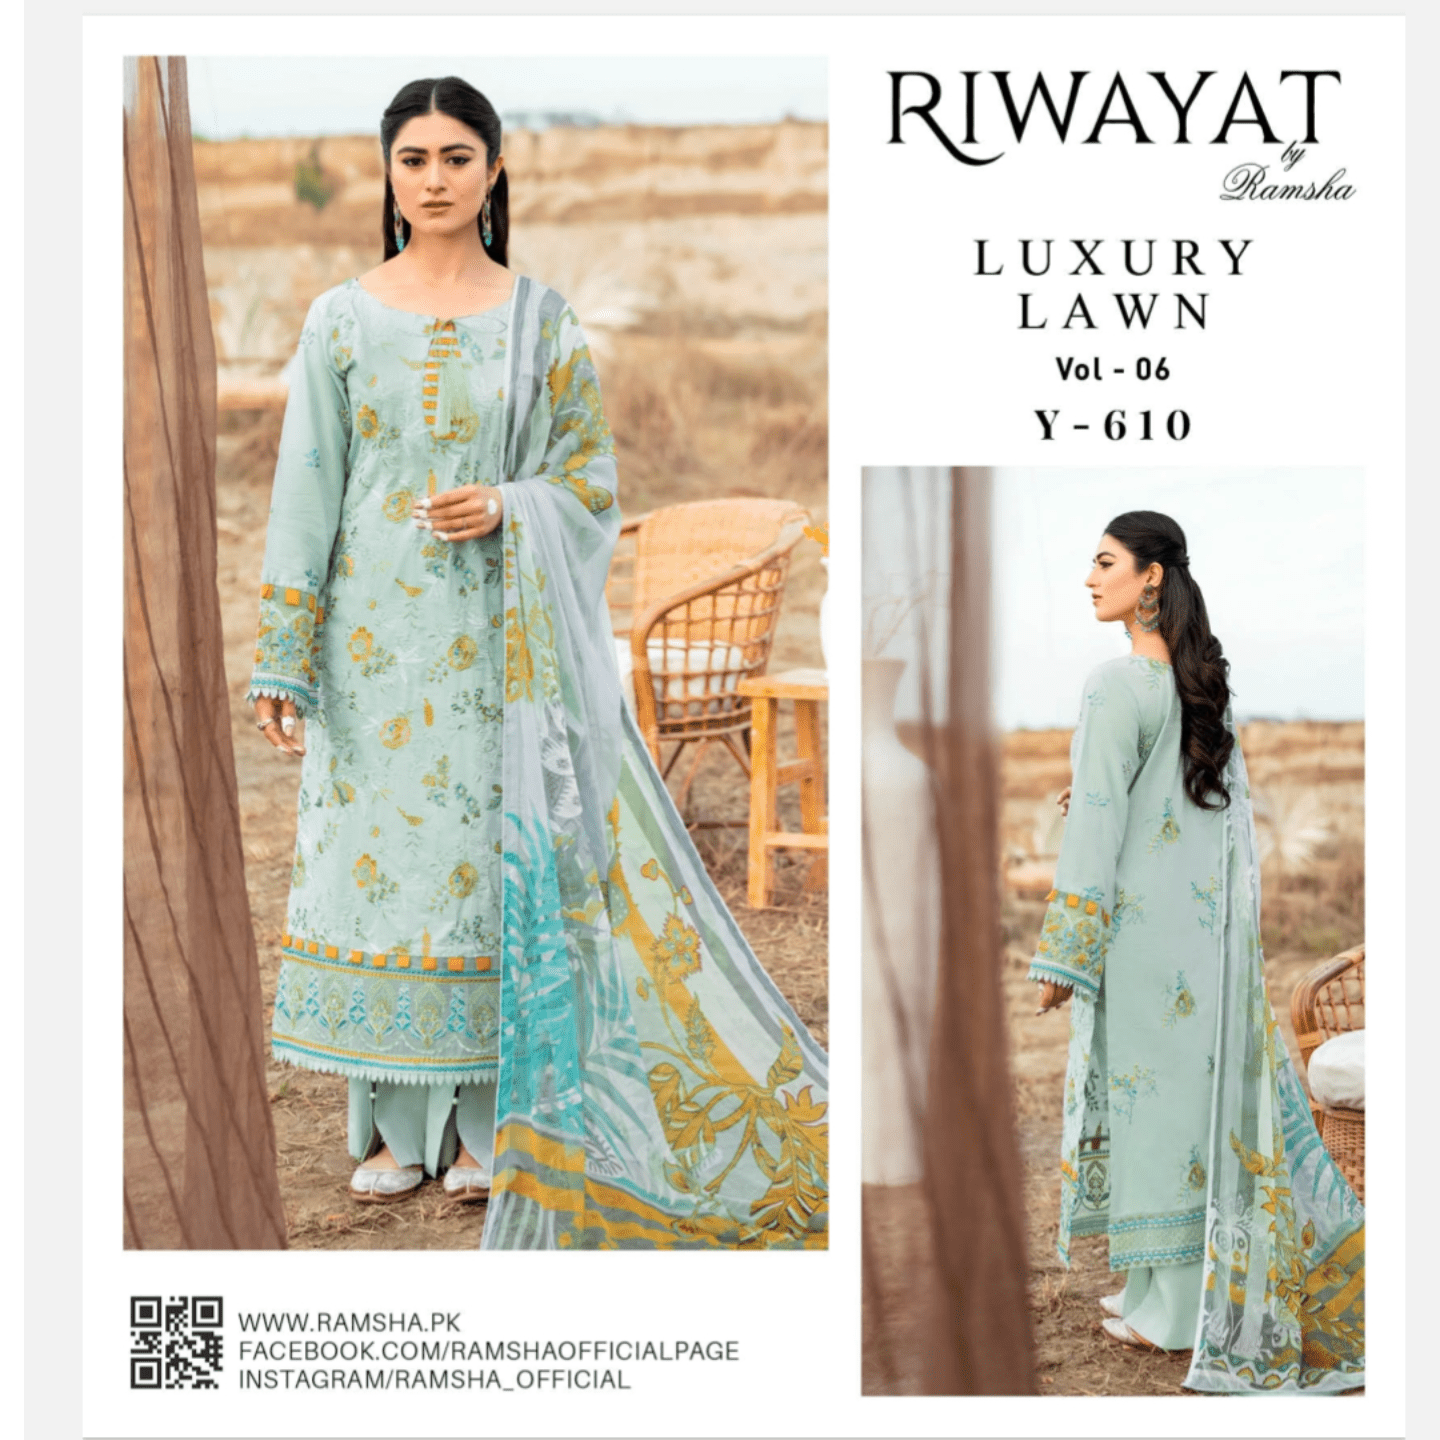 Riwayat luxury Lawn Vol 06 23